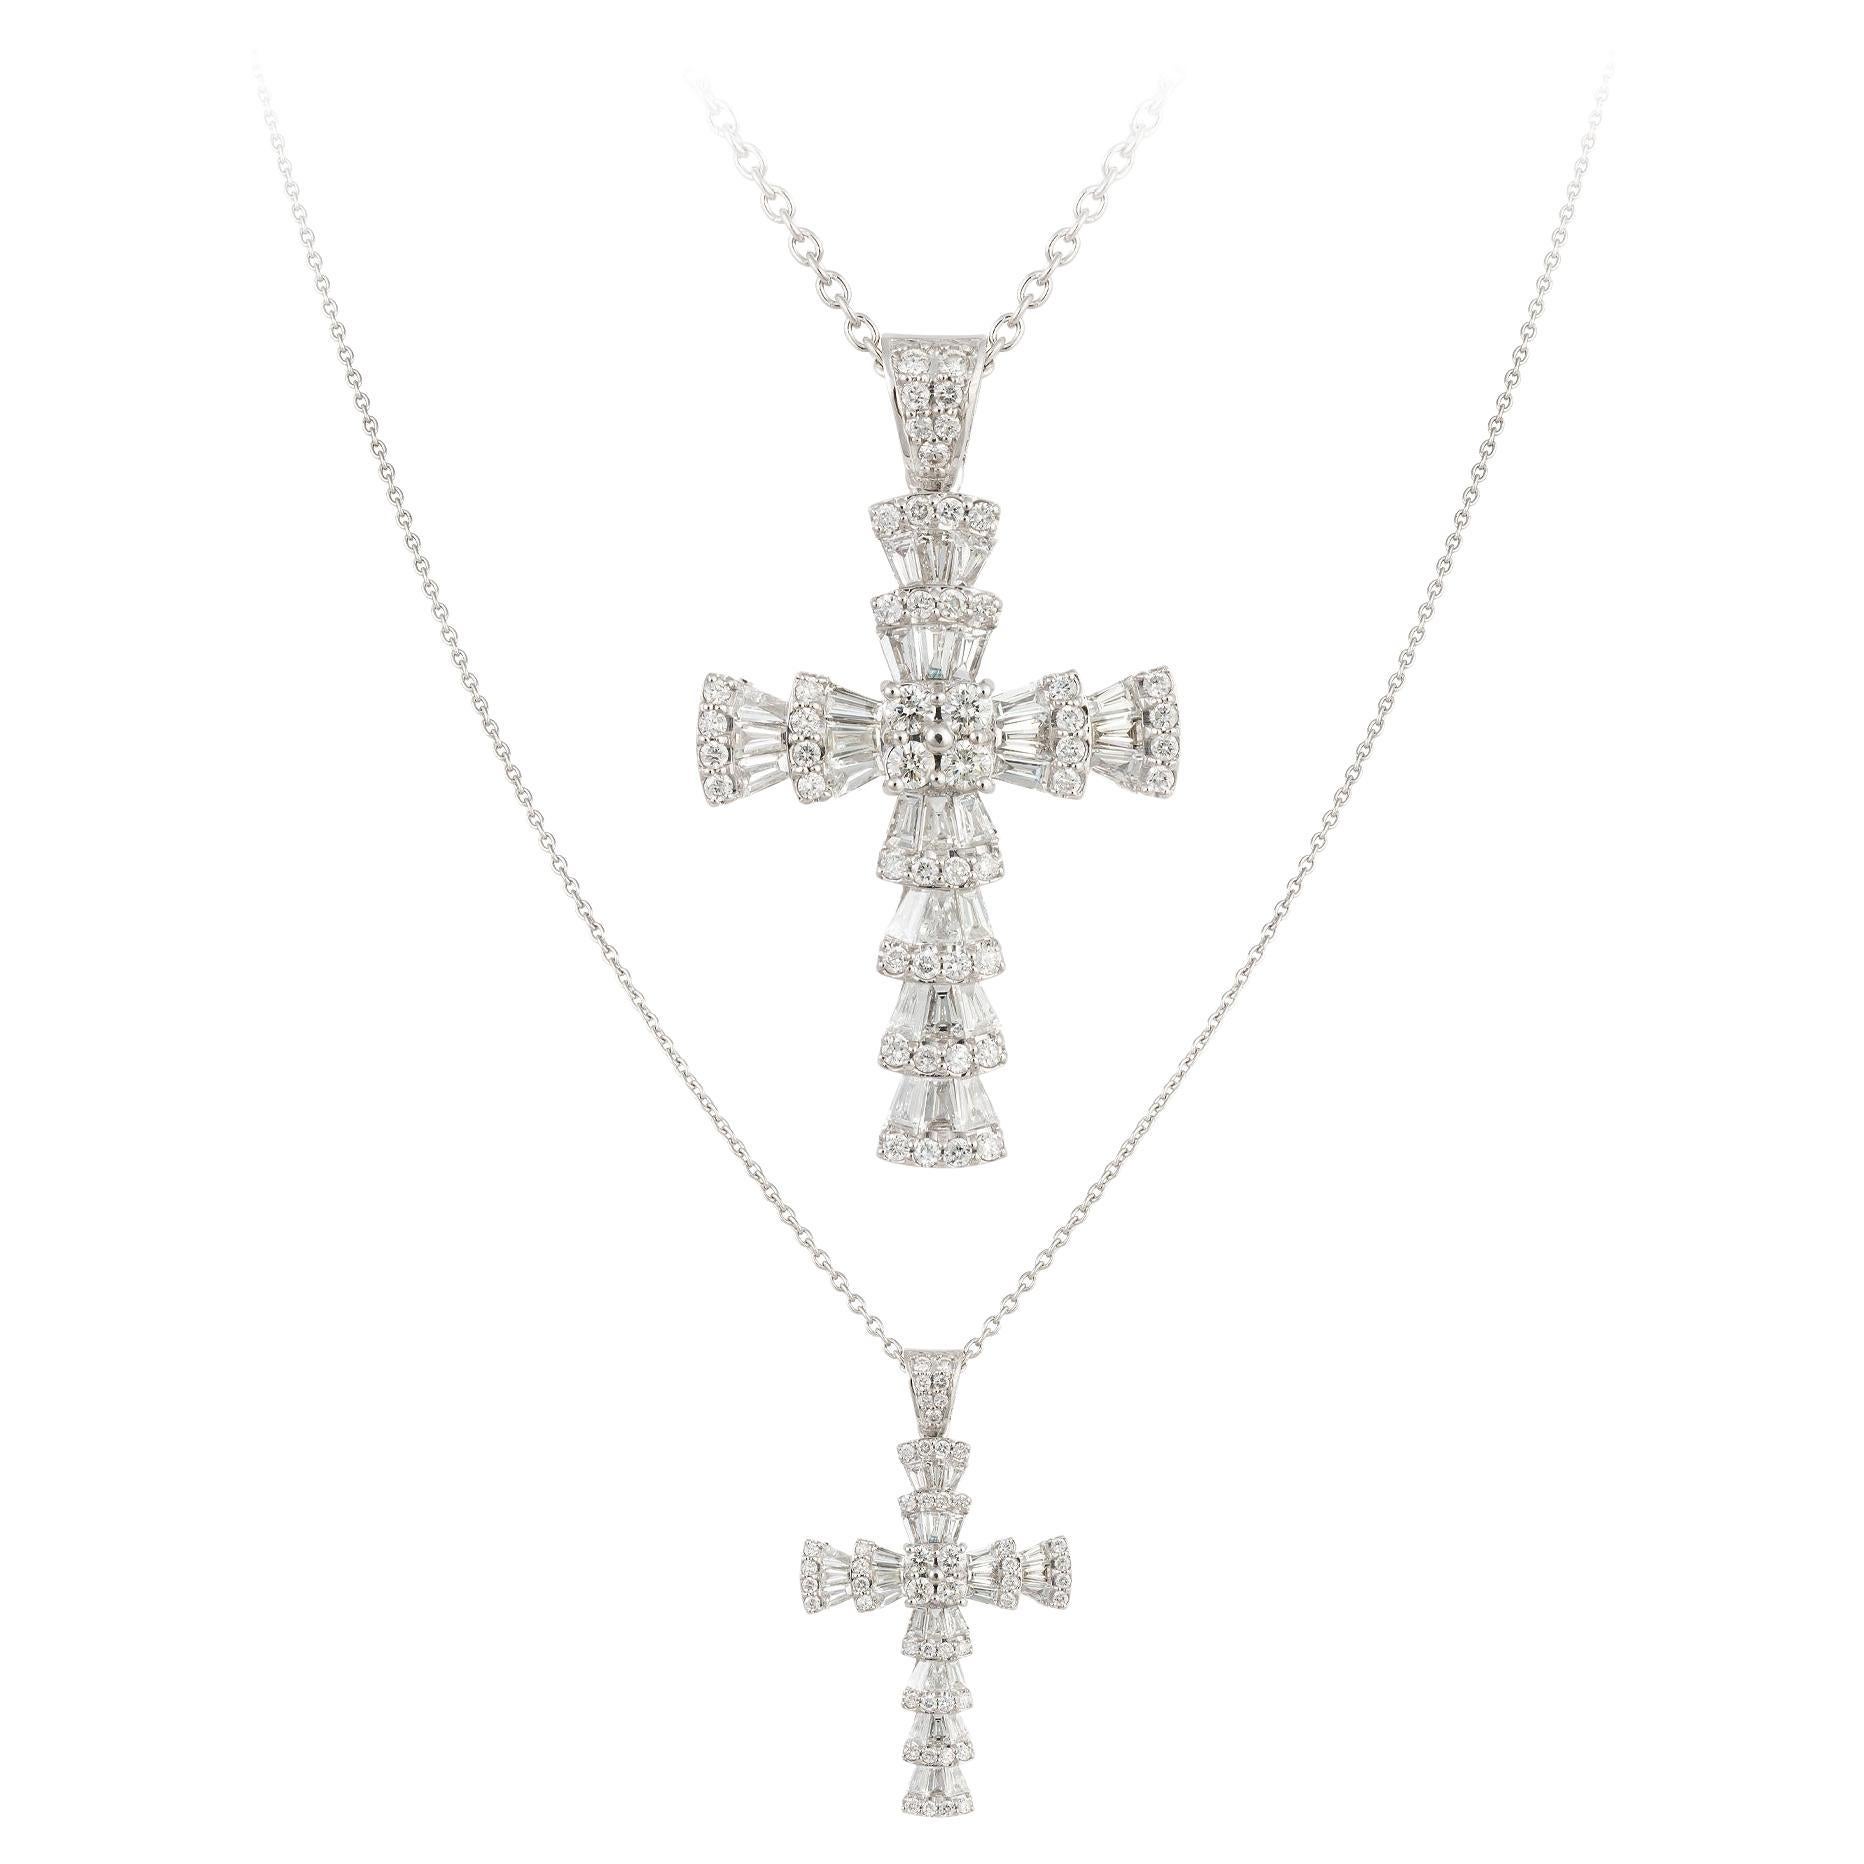 Cross White Gold 18K Necklace Diamond for Her